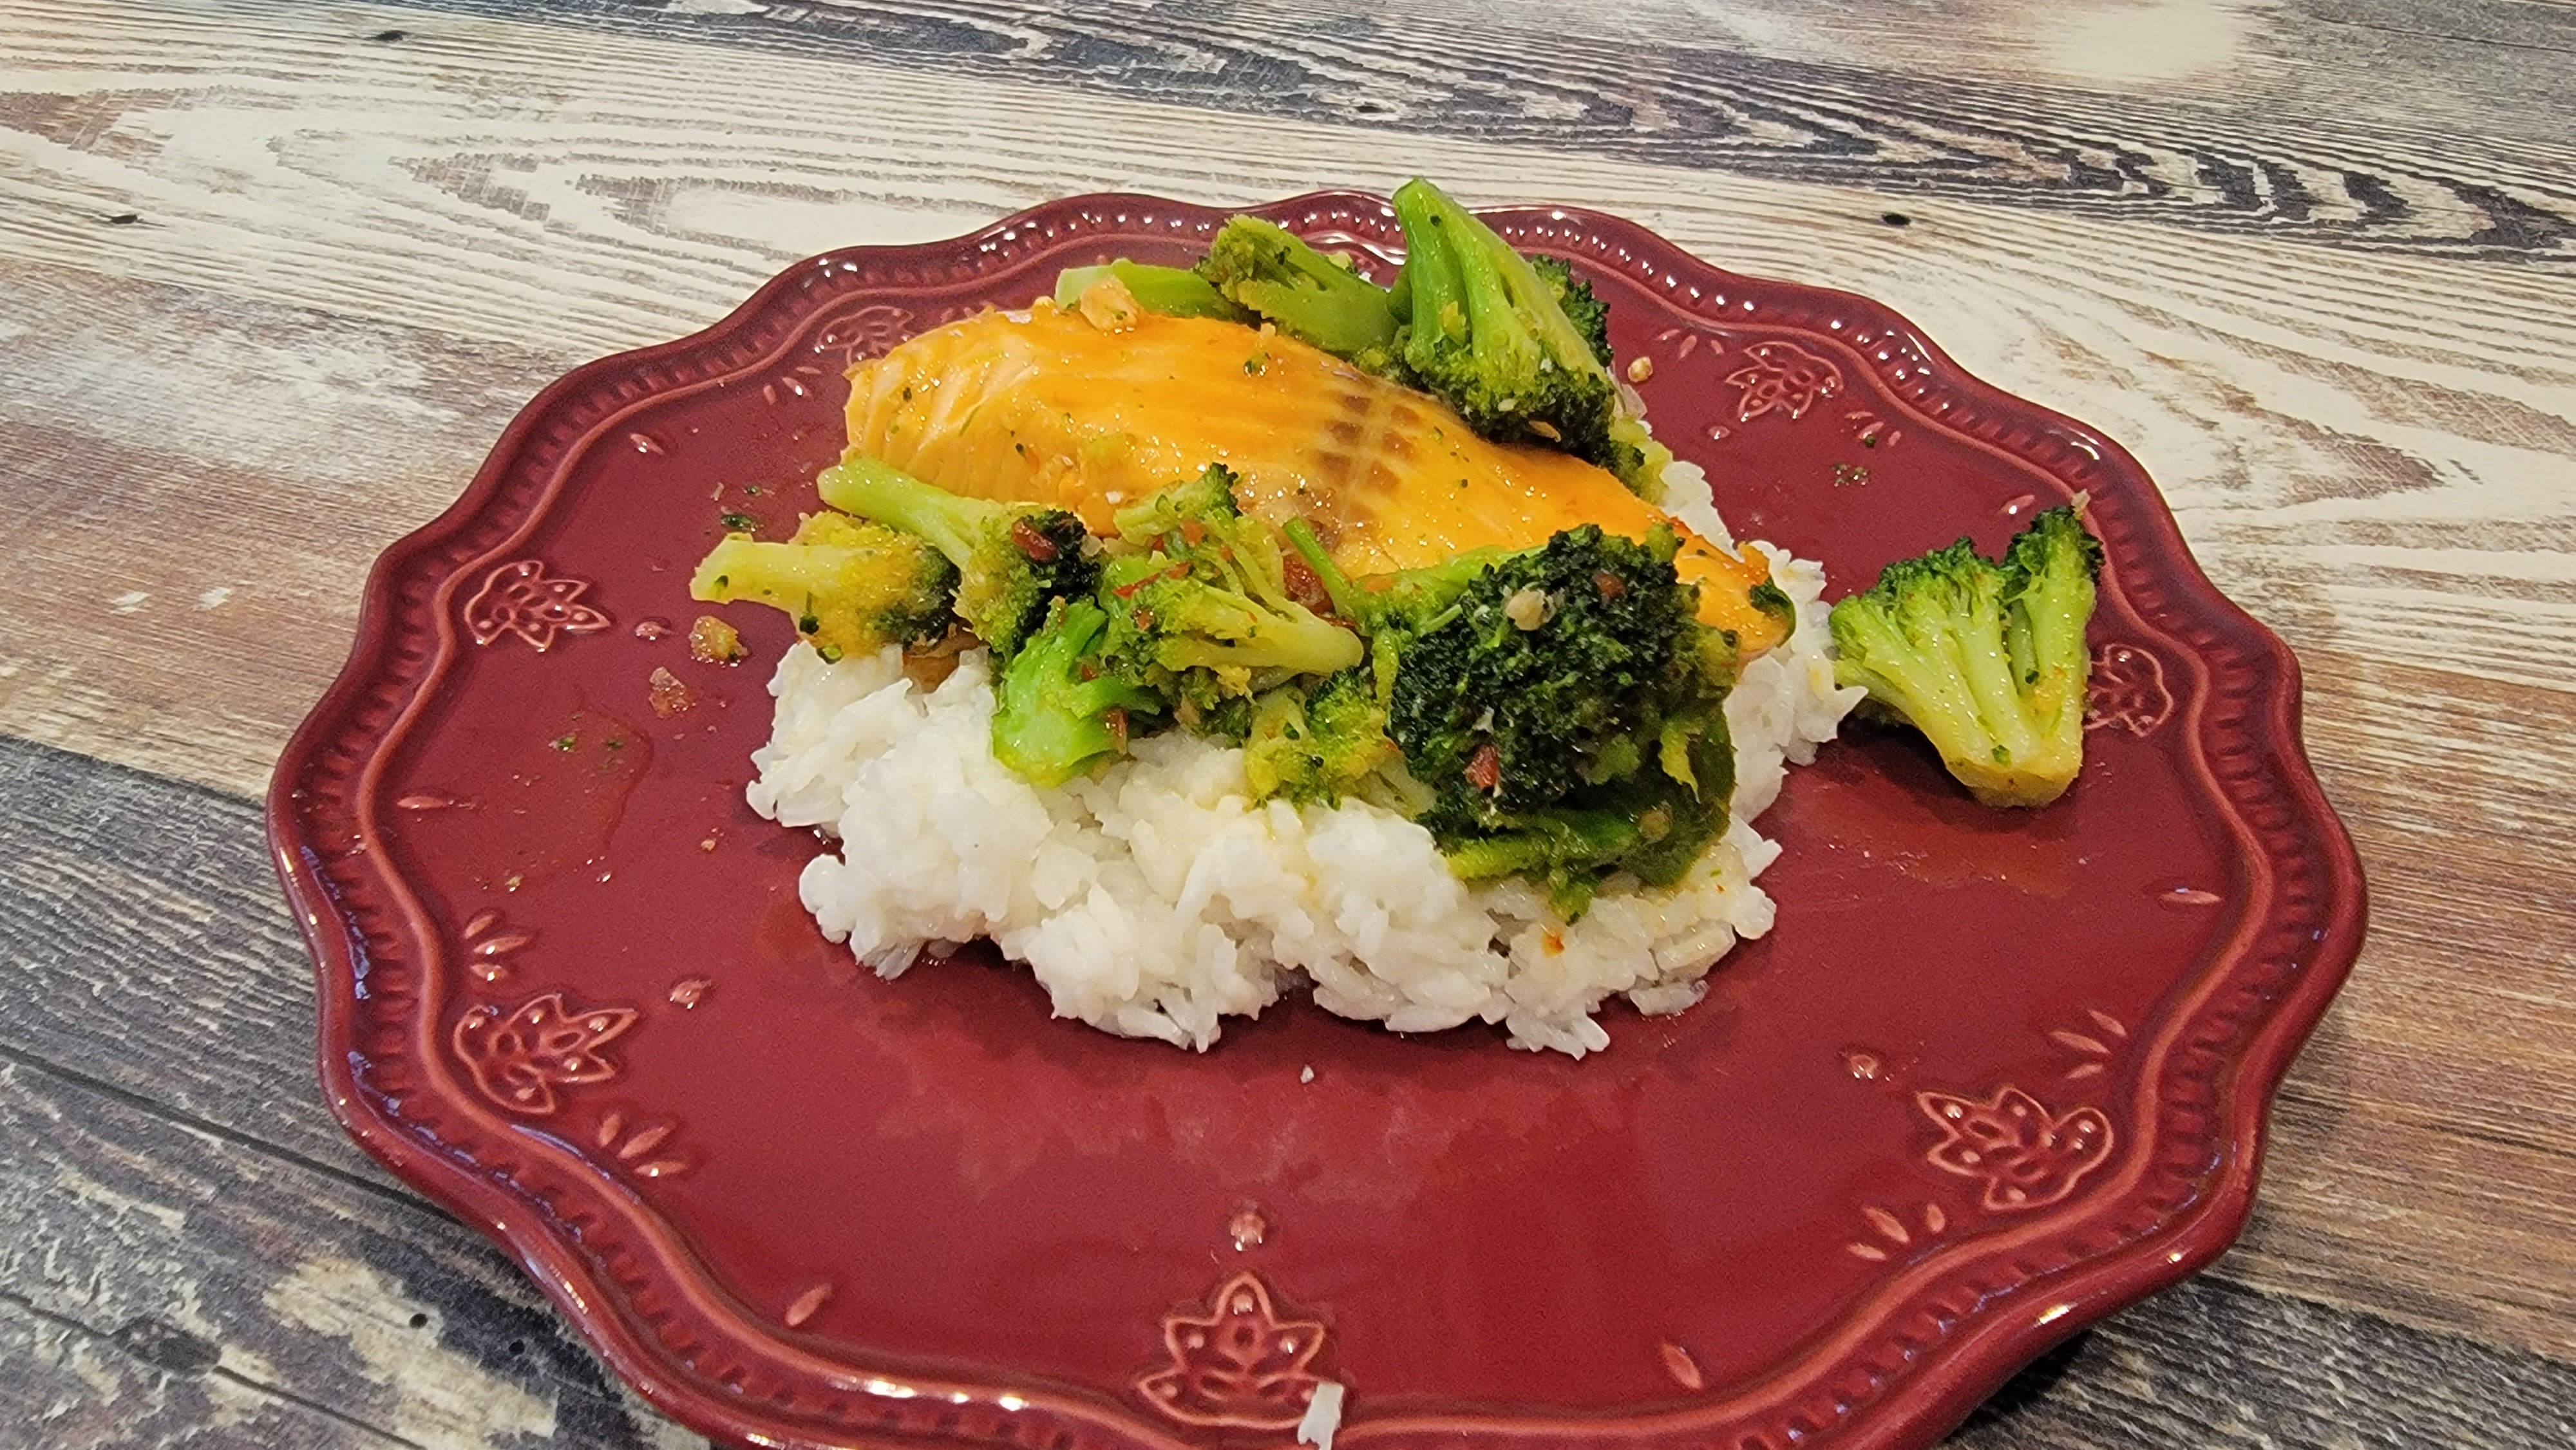 Sweet Chili Salmon and Broccoli